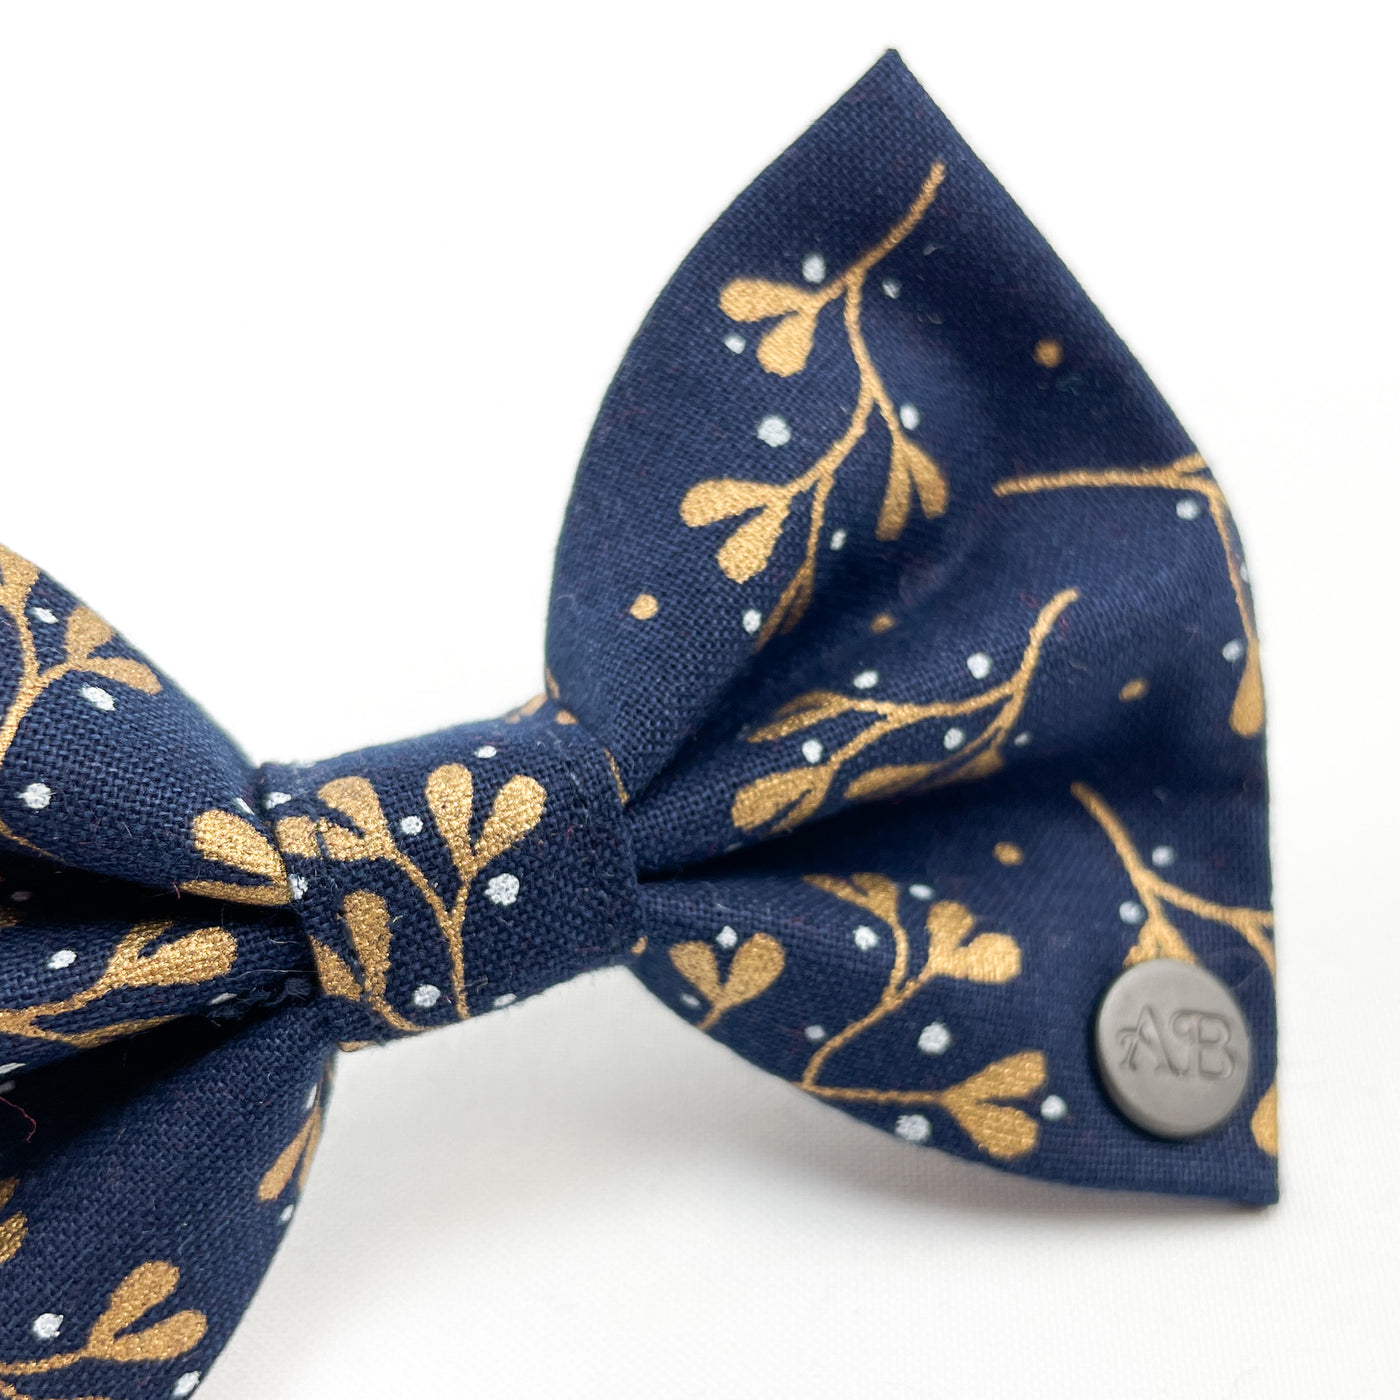 Navy mistletoe bow tie